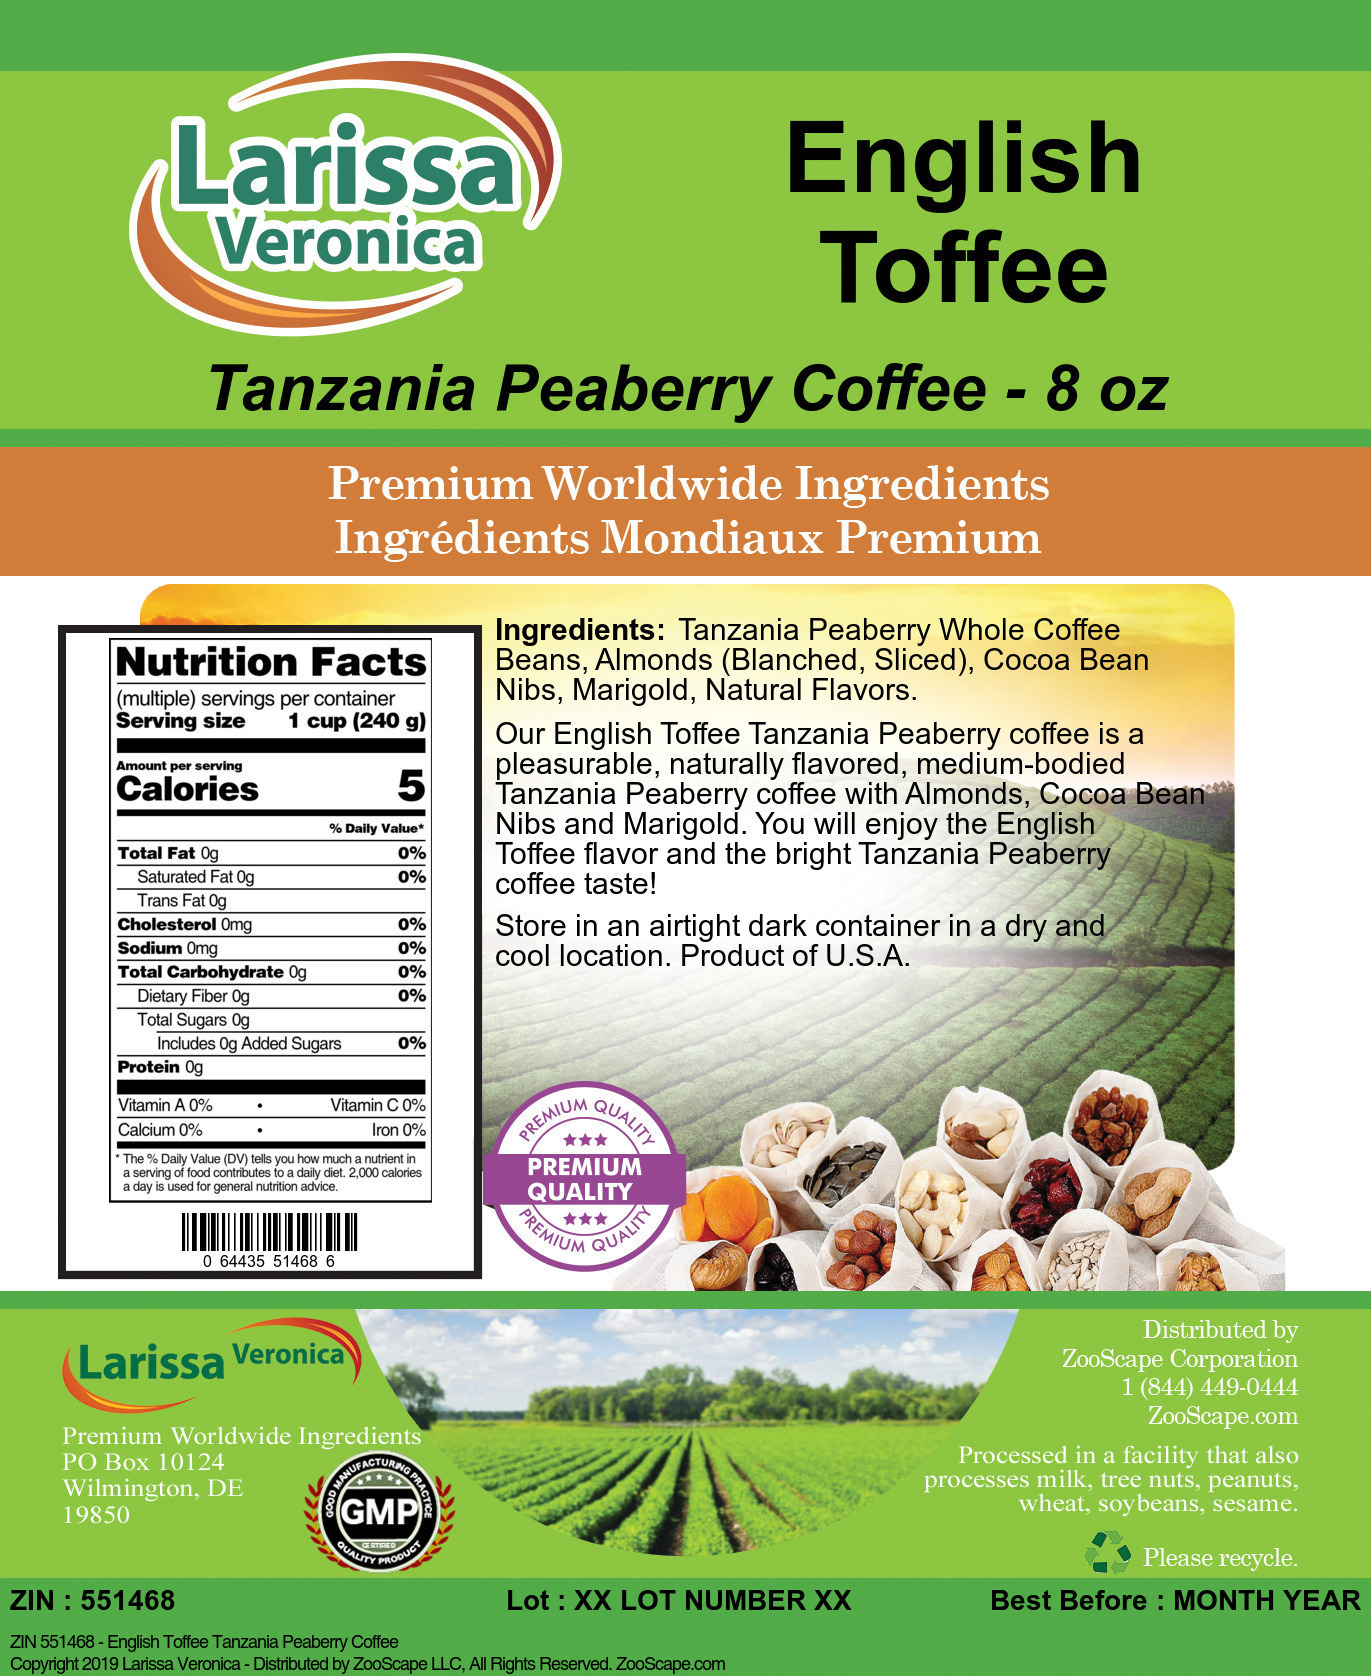 English Toffee Tanzania Peaberry Coffee - Label